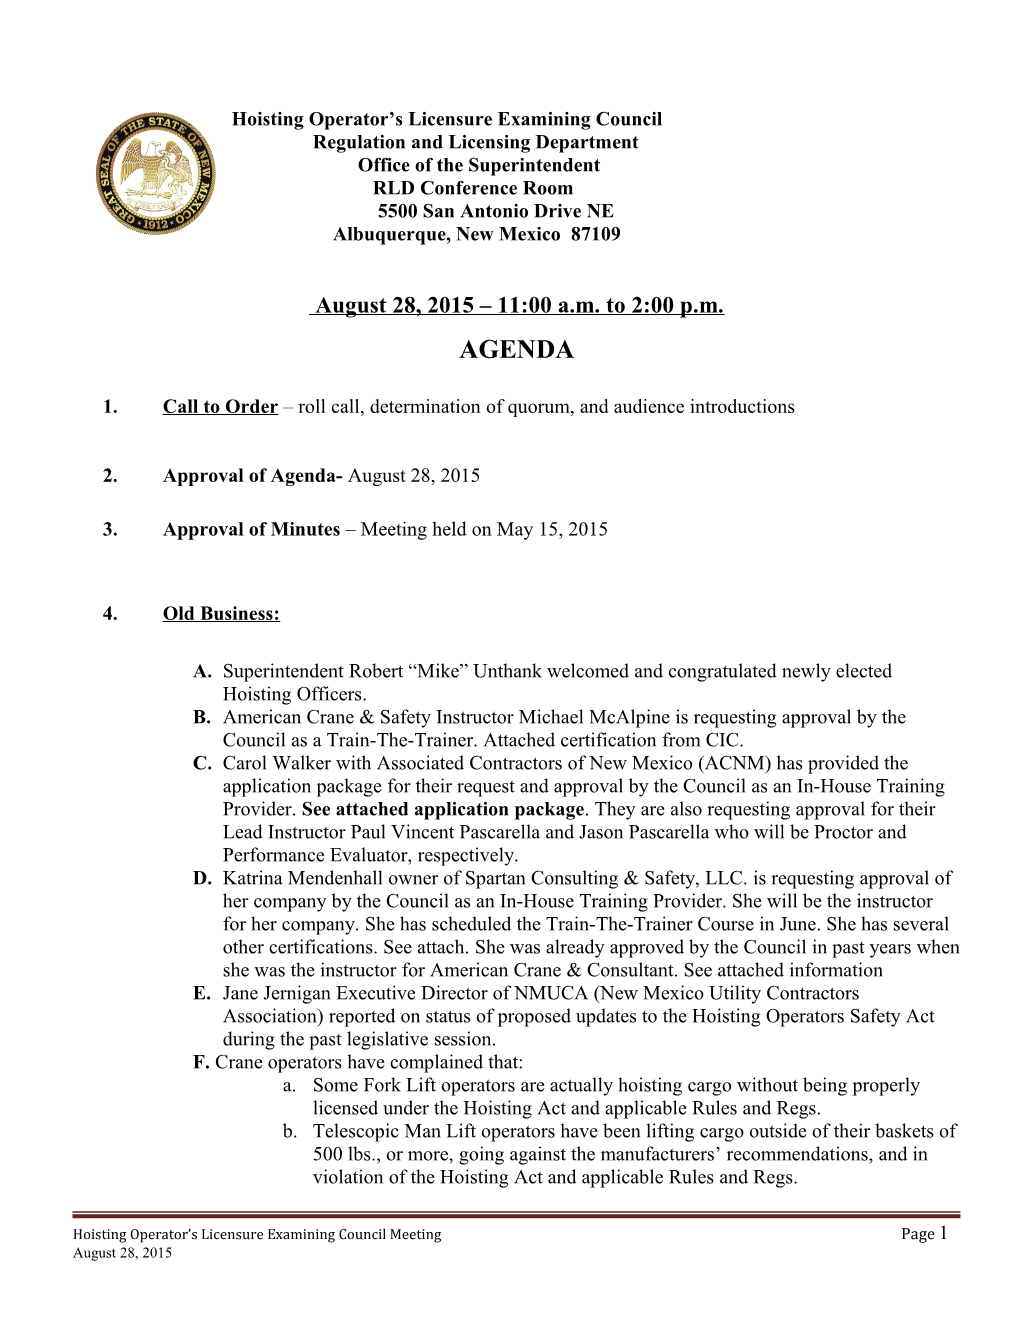 Hoisting Operator S Licensure Examining Council Agenda January 17, 2014